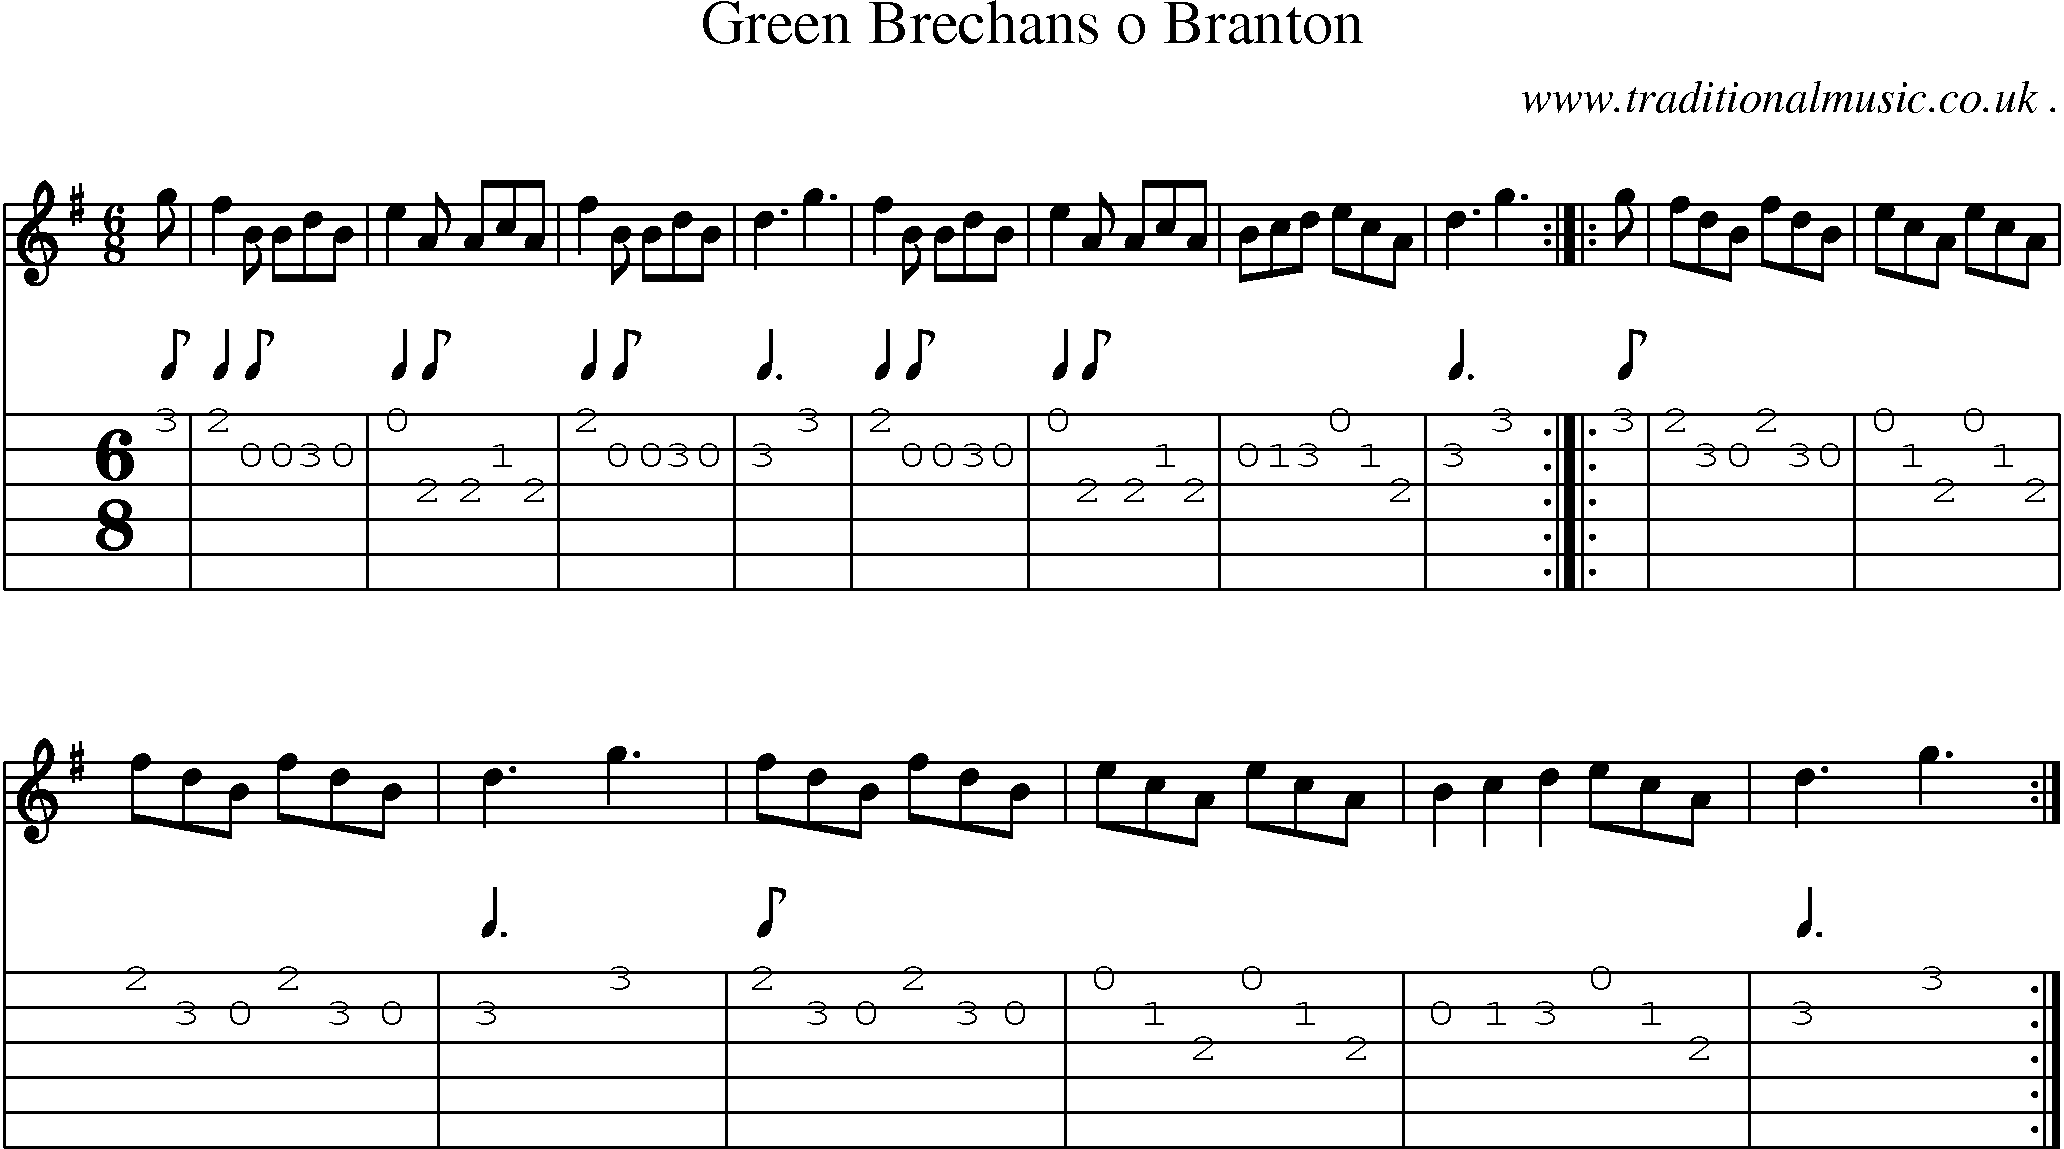 Sheet-Music and Guitar Tabs for Green Brechans O Branton